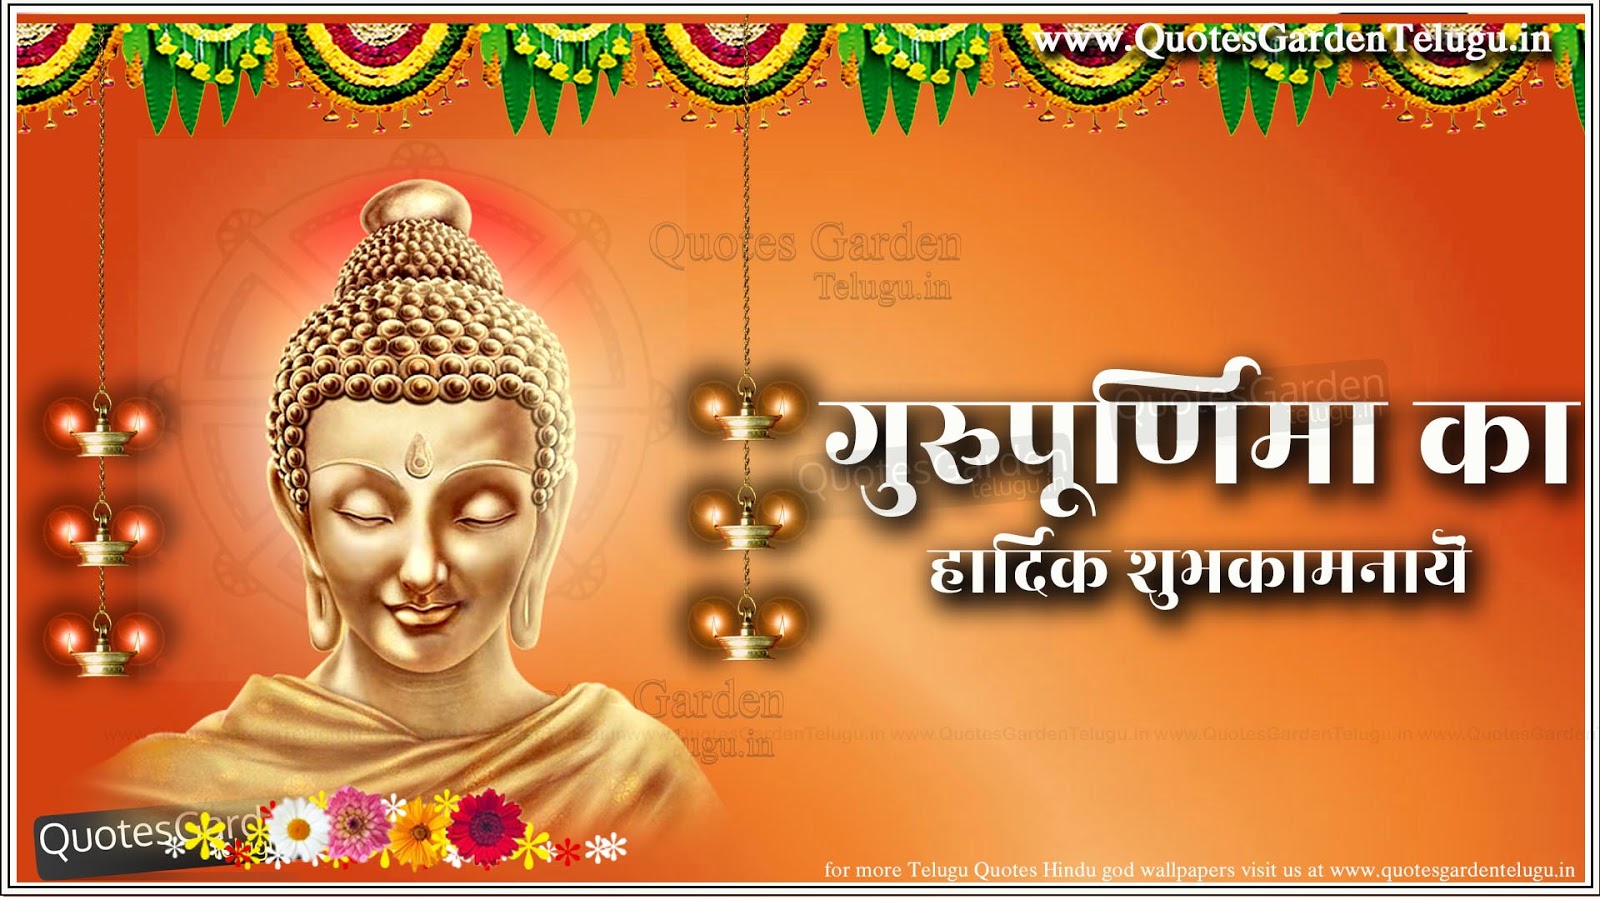 Happy Guru Purnima Greetings wishes in hindi | QUOTES GARDEN TELUGU